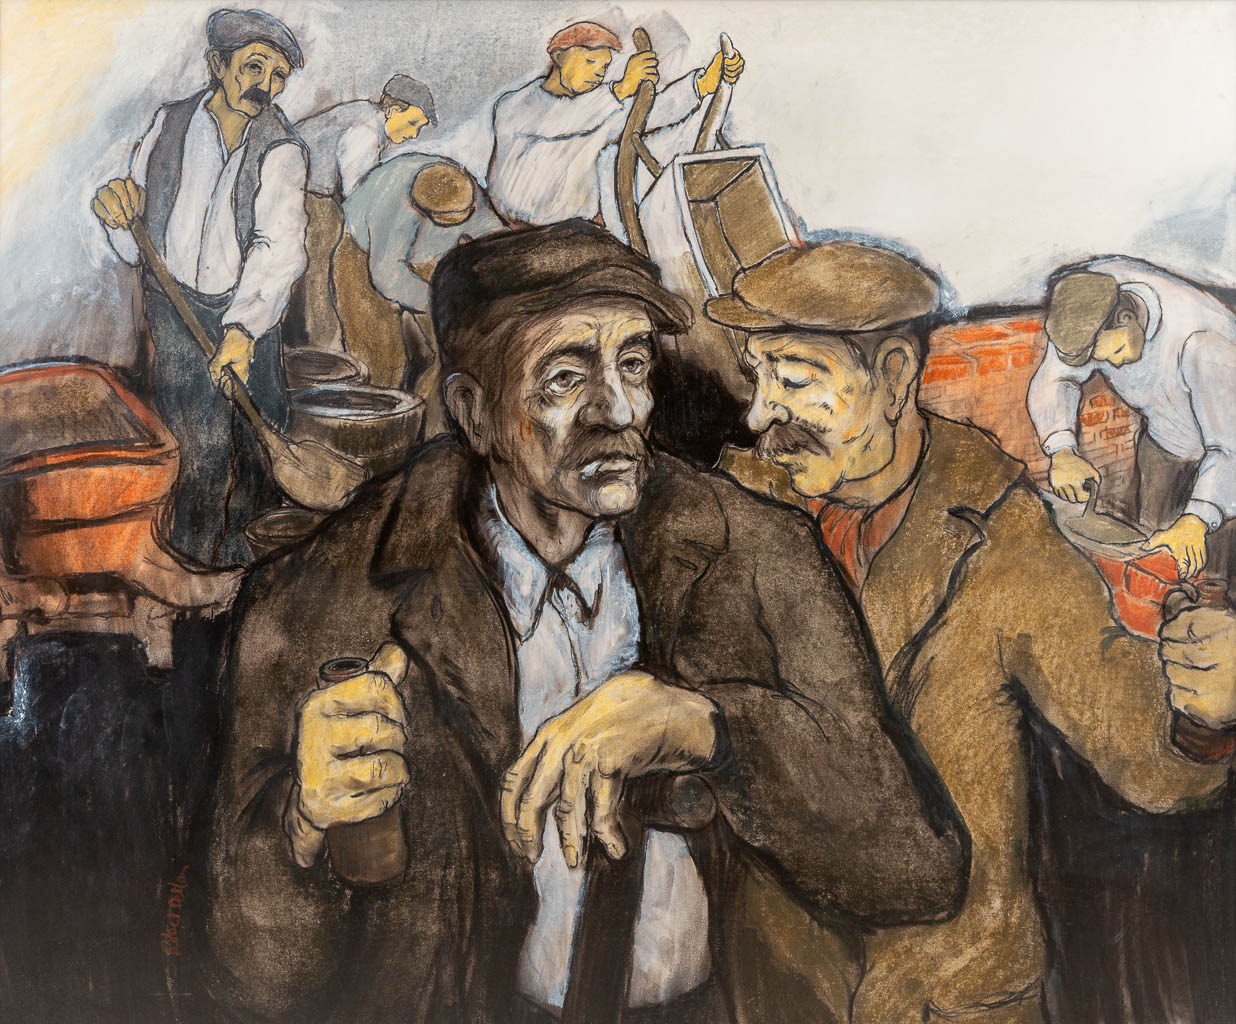 Robert DE MAN (1949-2016) 'Bouwvakkers' a drawing of construction workers, Gouache on paper. 1991. (120 x 103 cm)